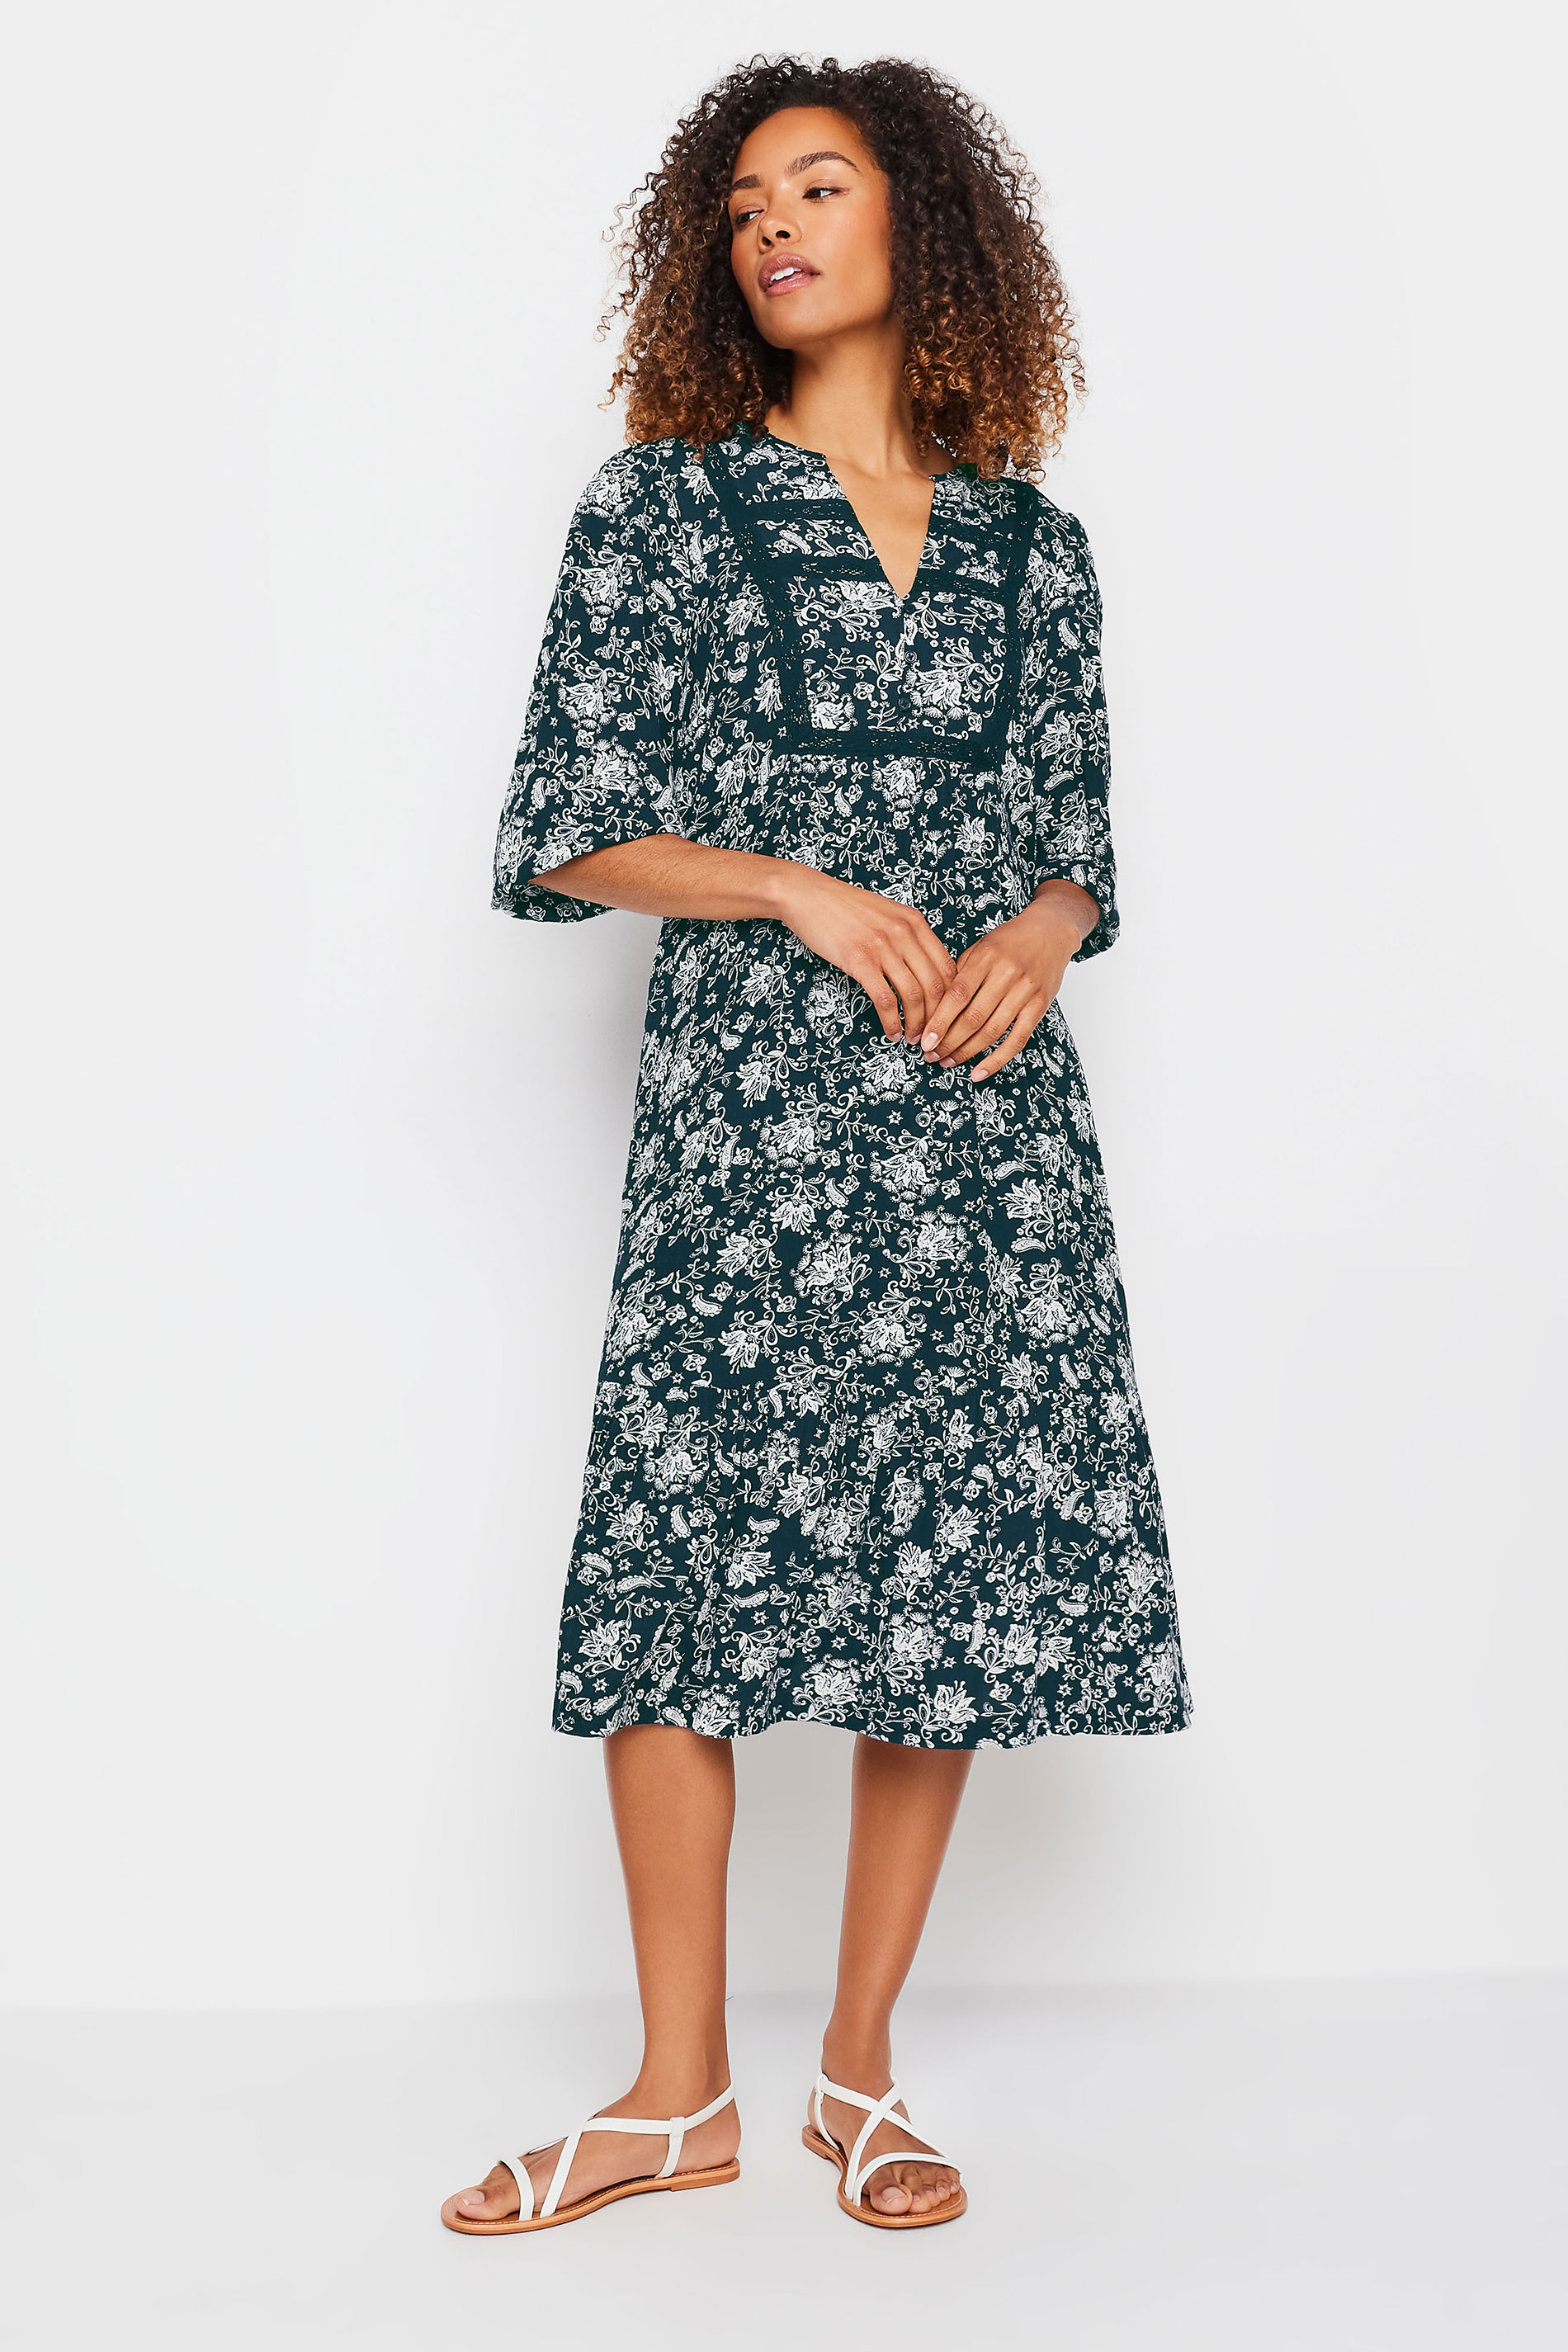 M&Co Navy Blue Damask Print Lace Trim Dress | M&Co 1